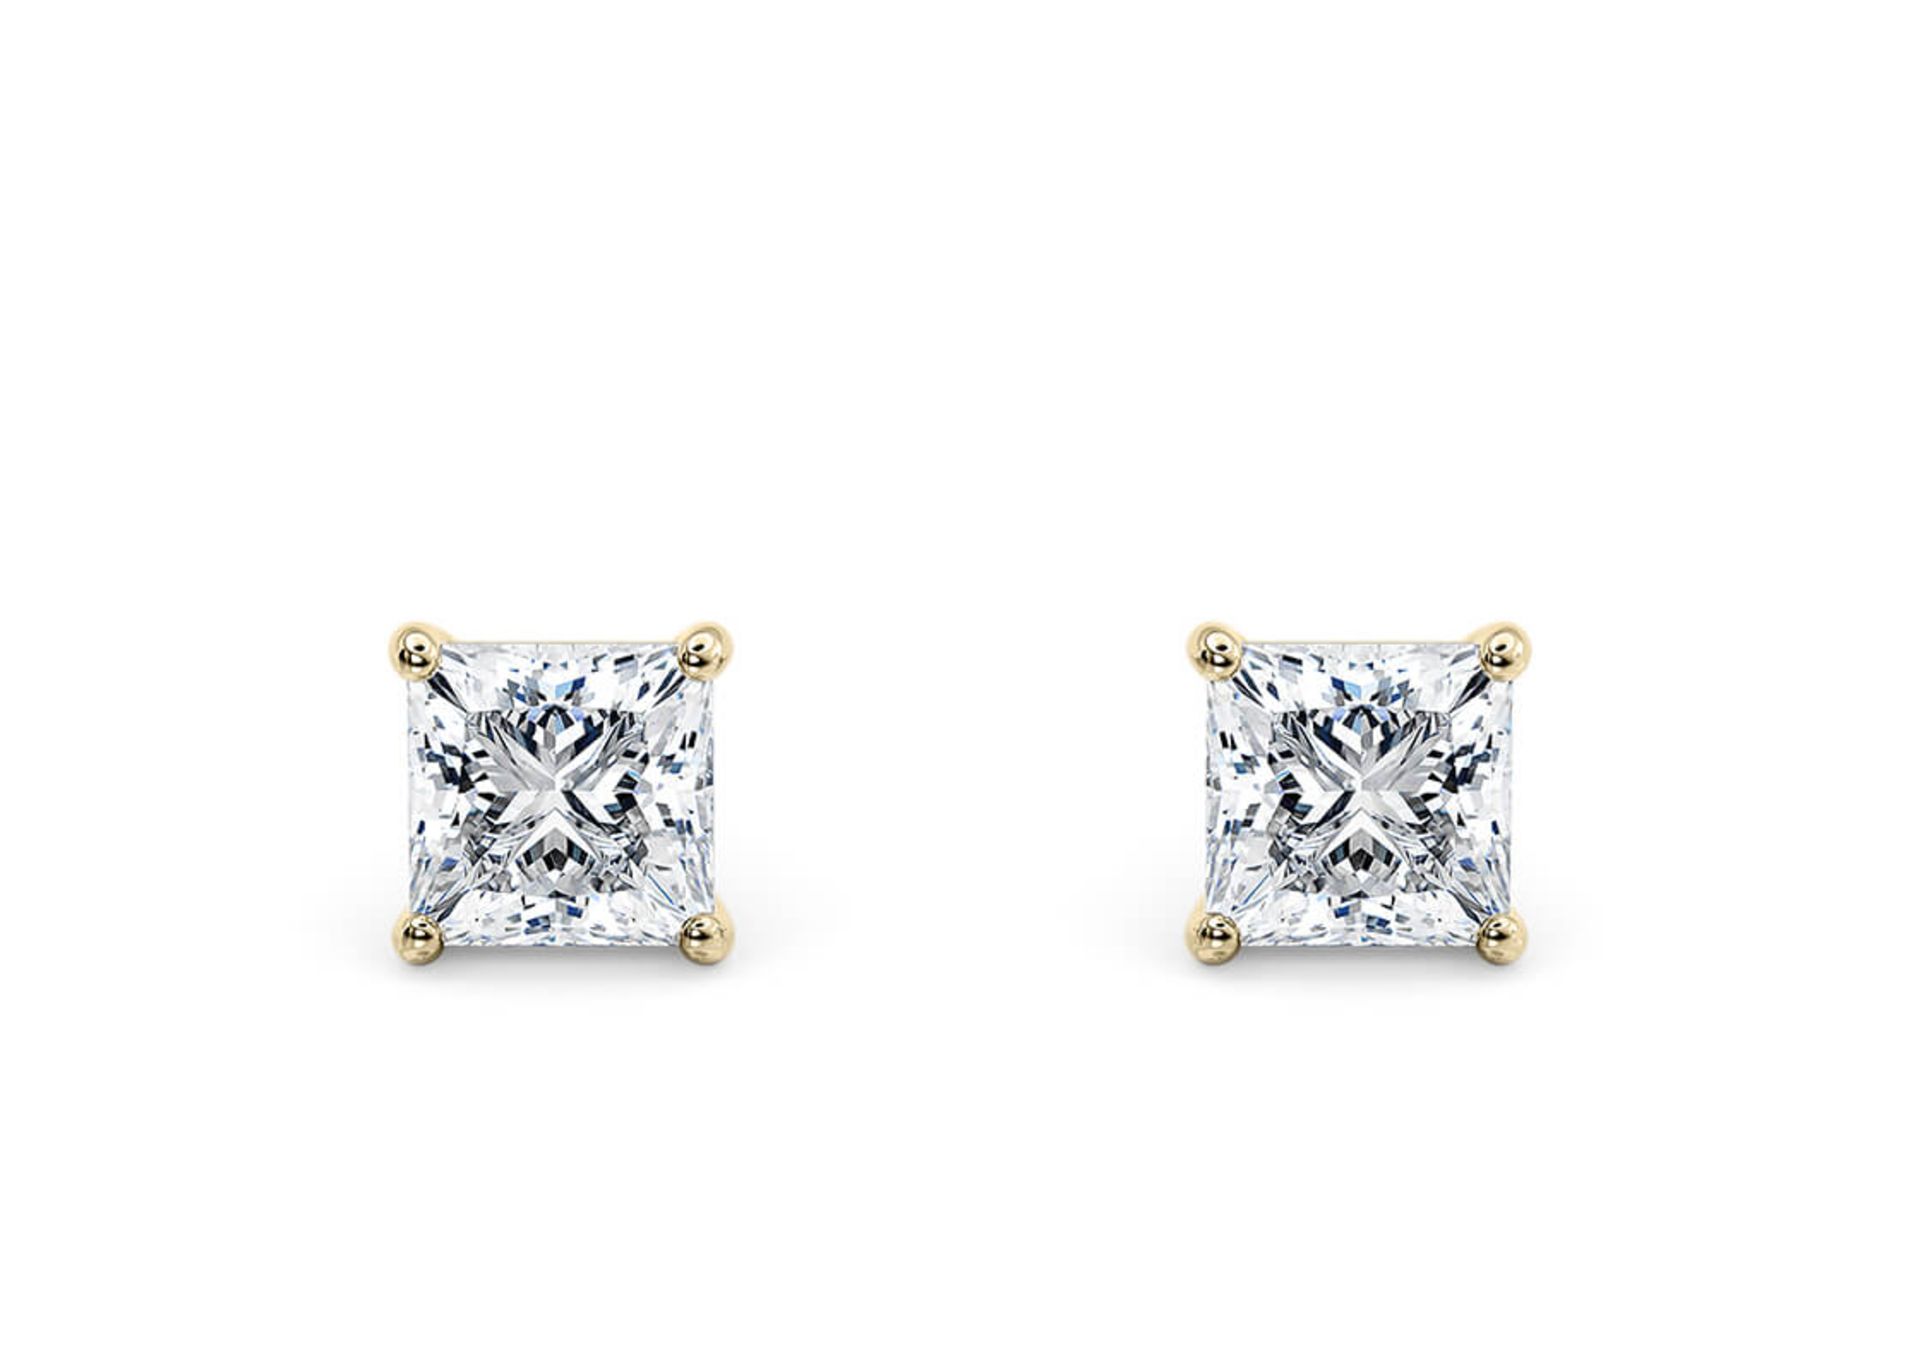 Princess Cut 4.00 Carat Diamond Earrings Set in 18kt Yellow Gold - E Colour VS Clarity - IGI